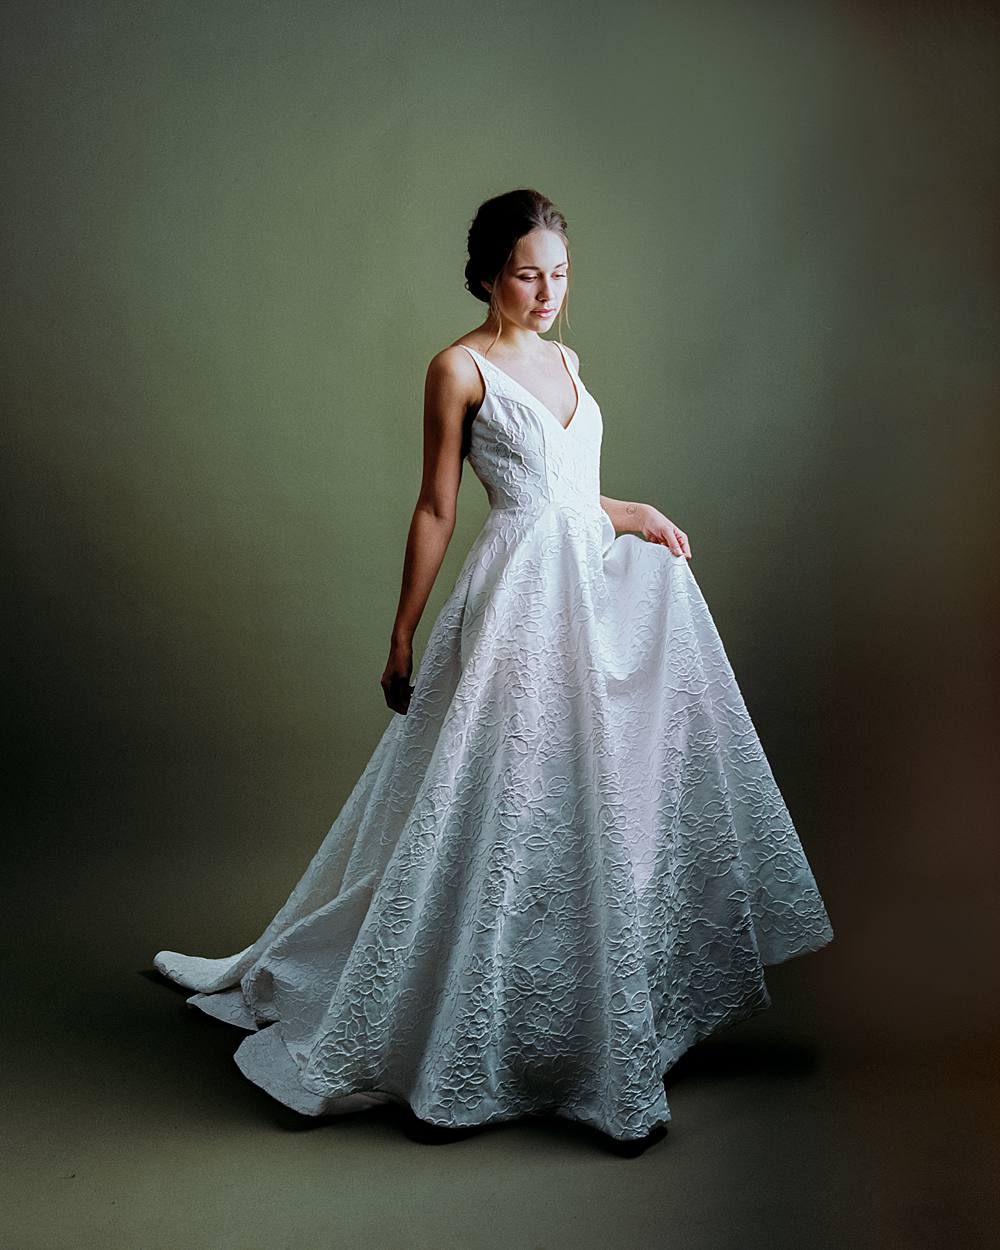 2002 charleston studio bridal portrait green seamless florals kodak portra 160 film strobes 00003_web